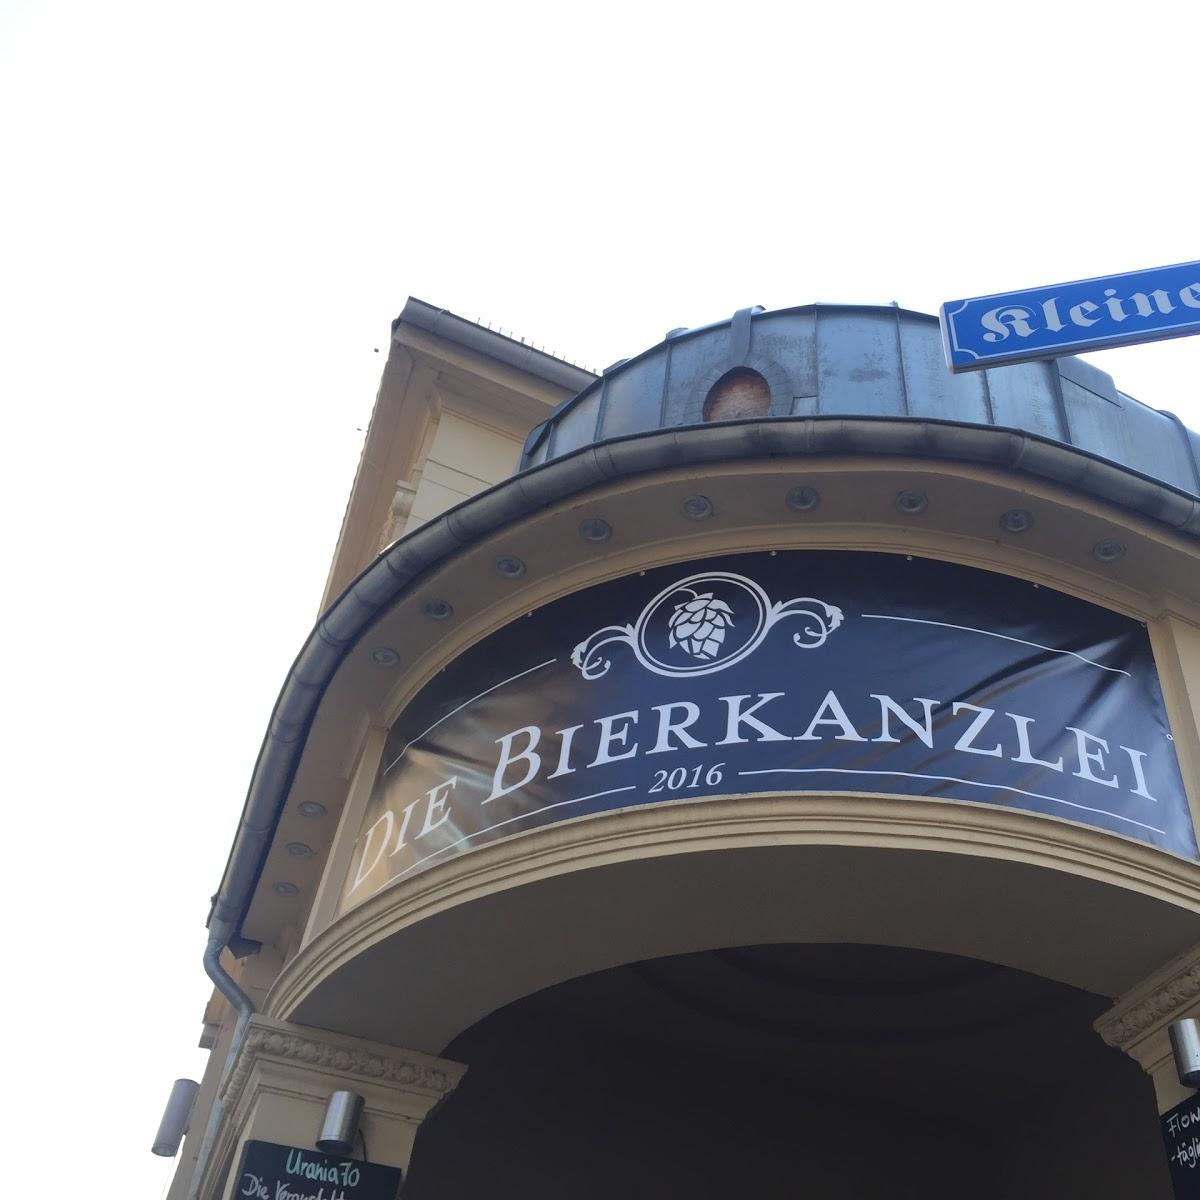 Restaurant "Die Bierkanzlei" in Halle (Saale)